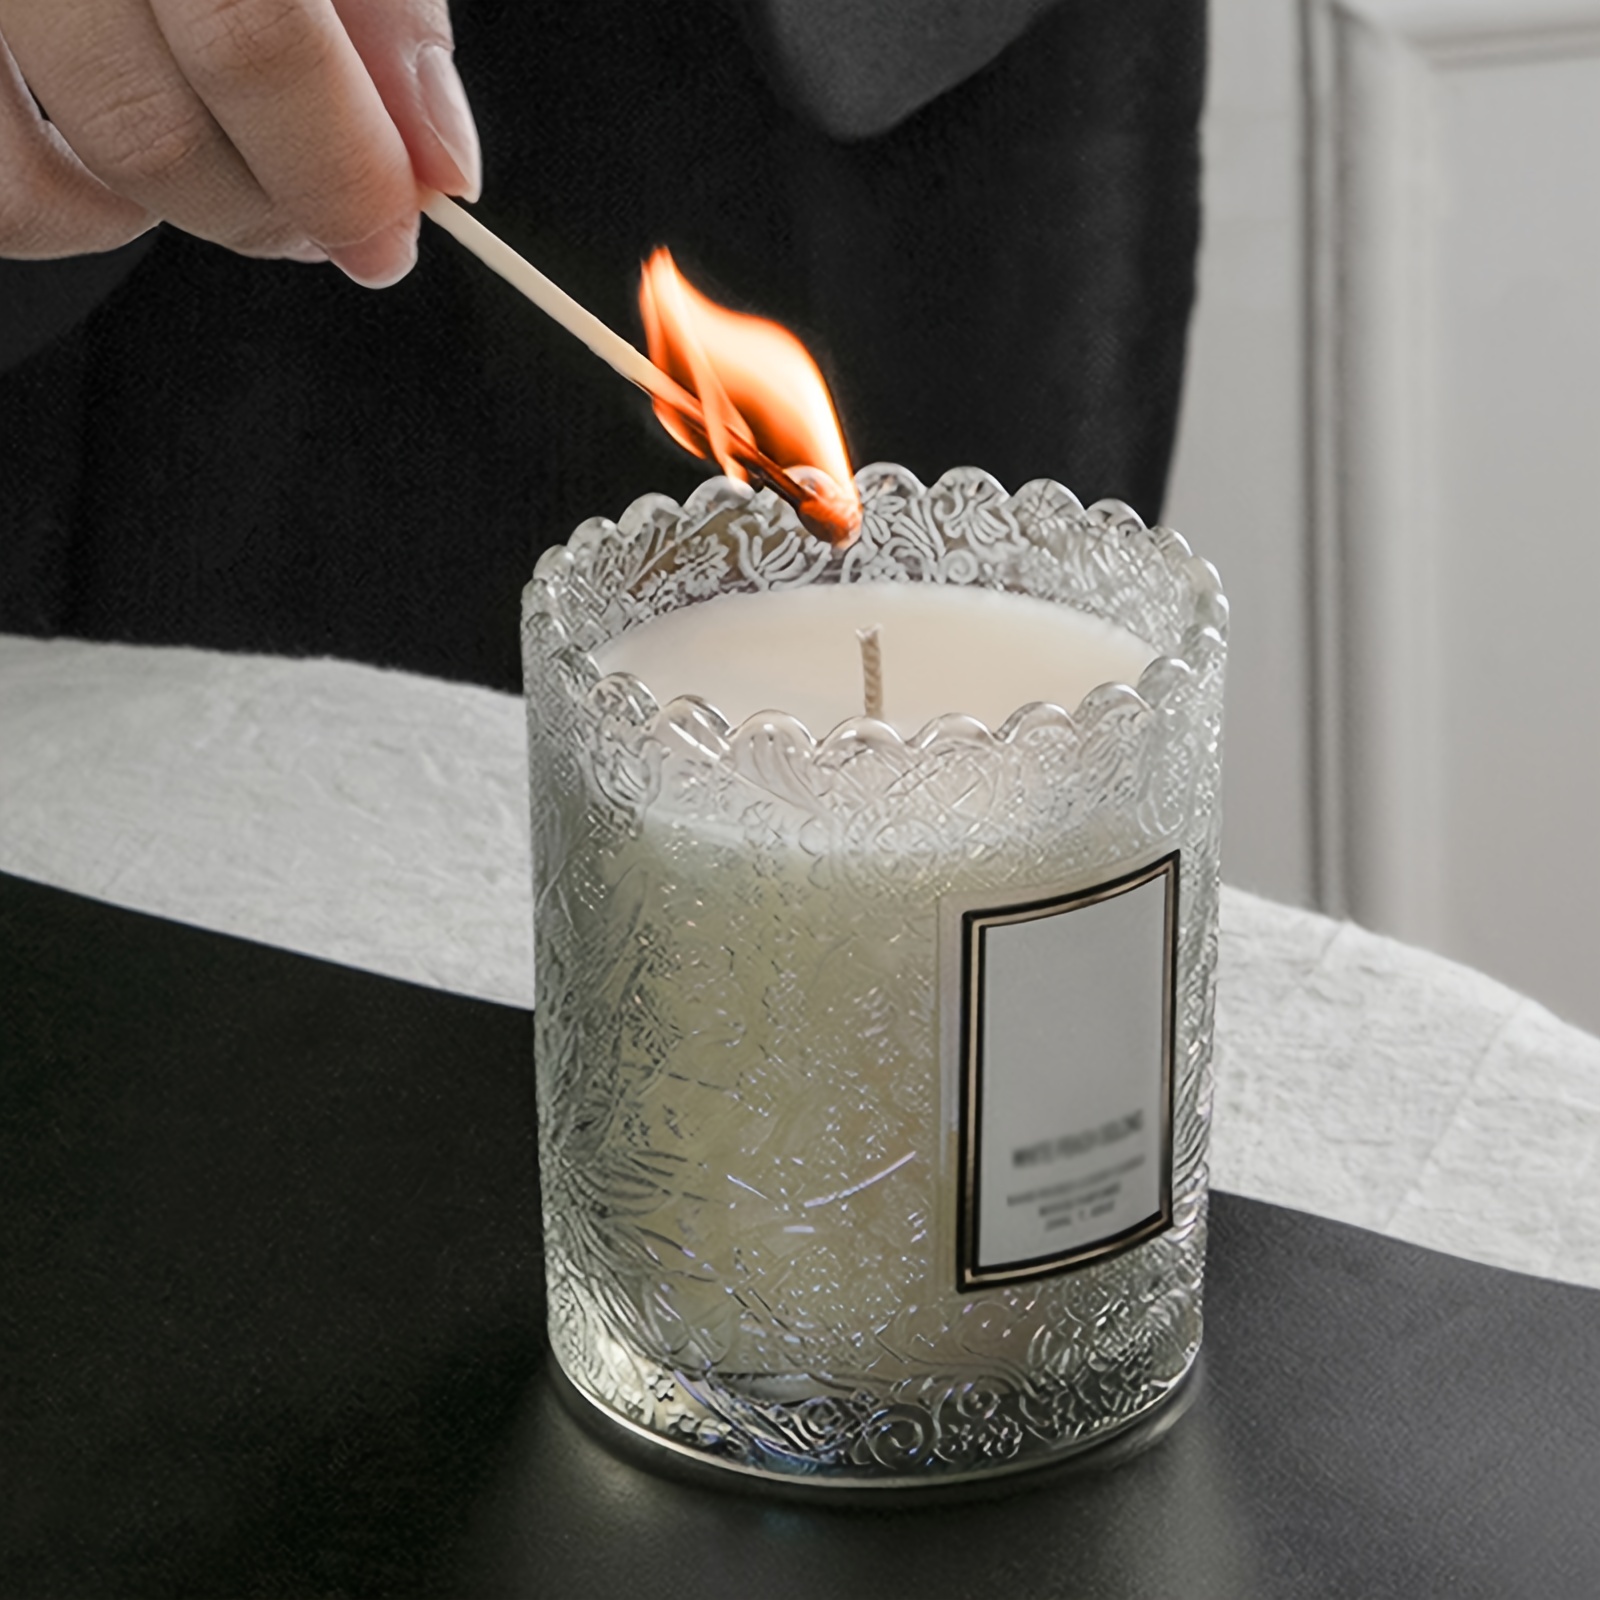 Cire de soja - Sachet 200g  Fabriquer vos bougies naturelles